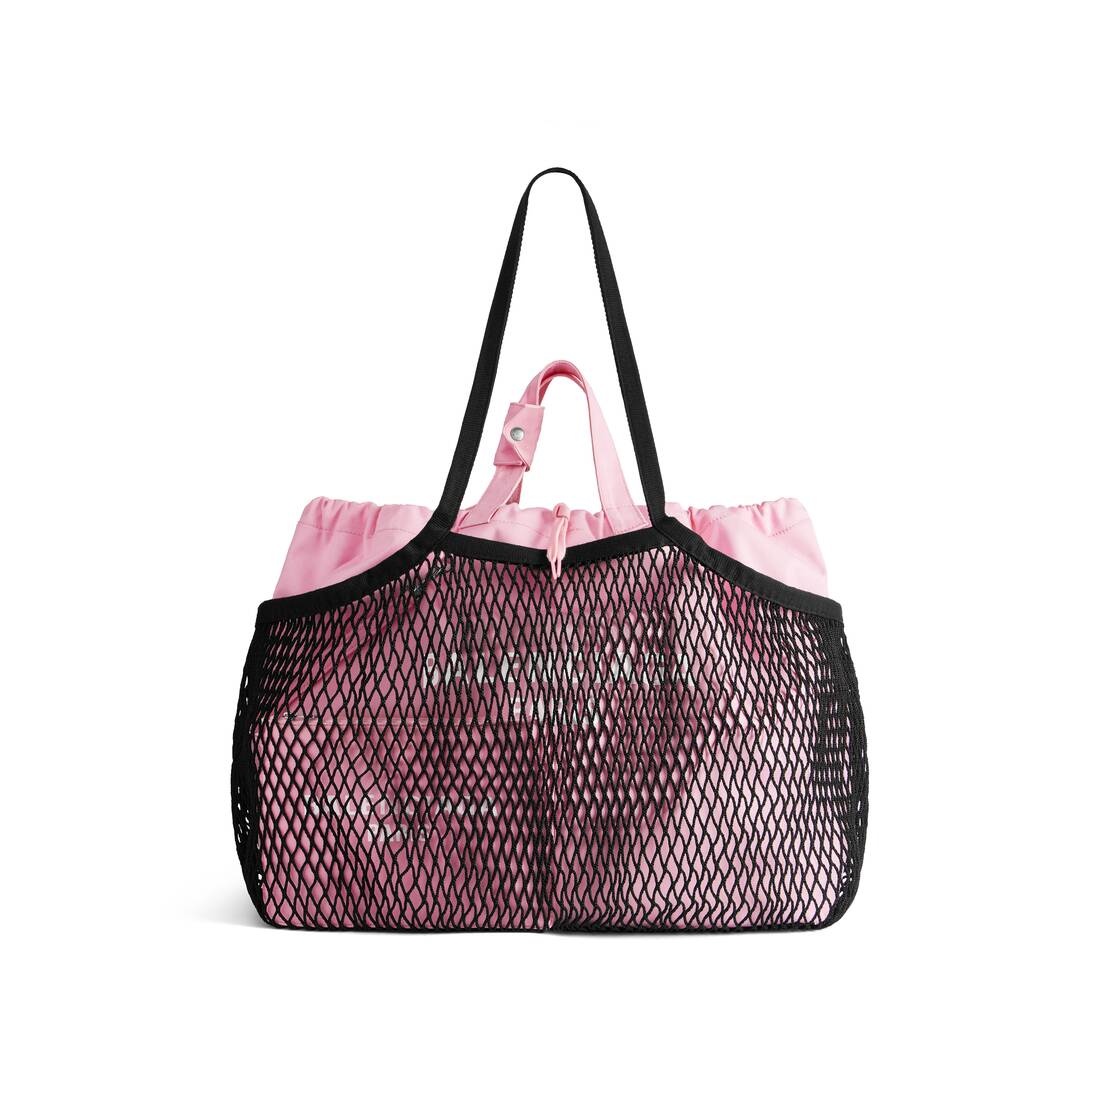 Women's 24/7 Large Tote Bag in Pink/black - 1